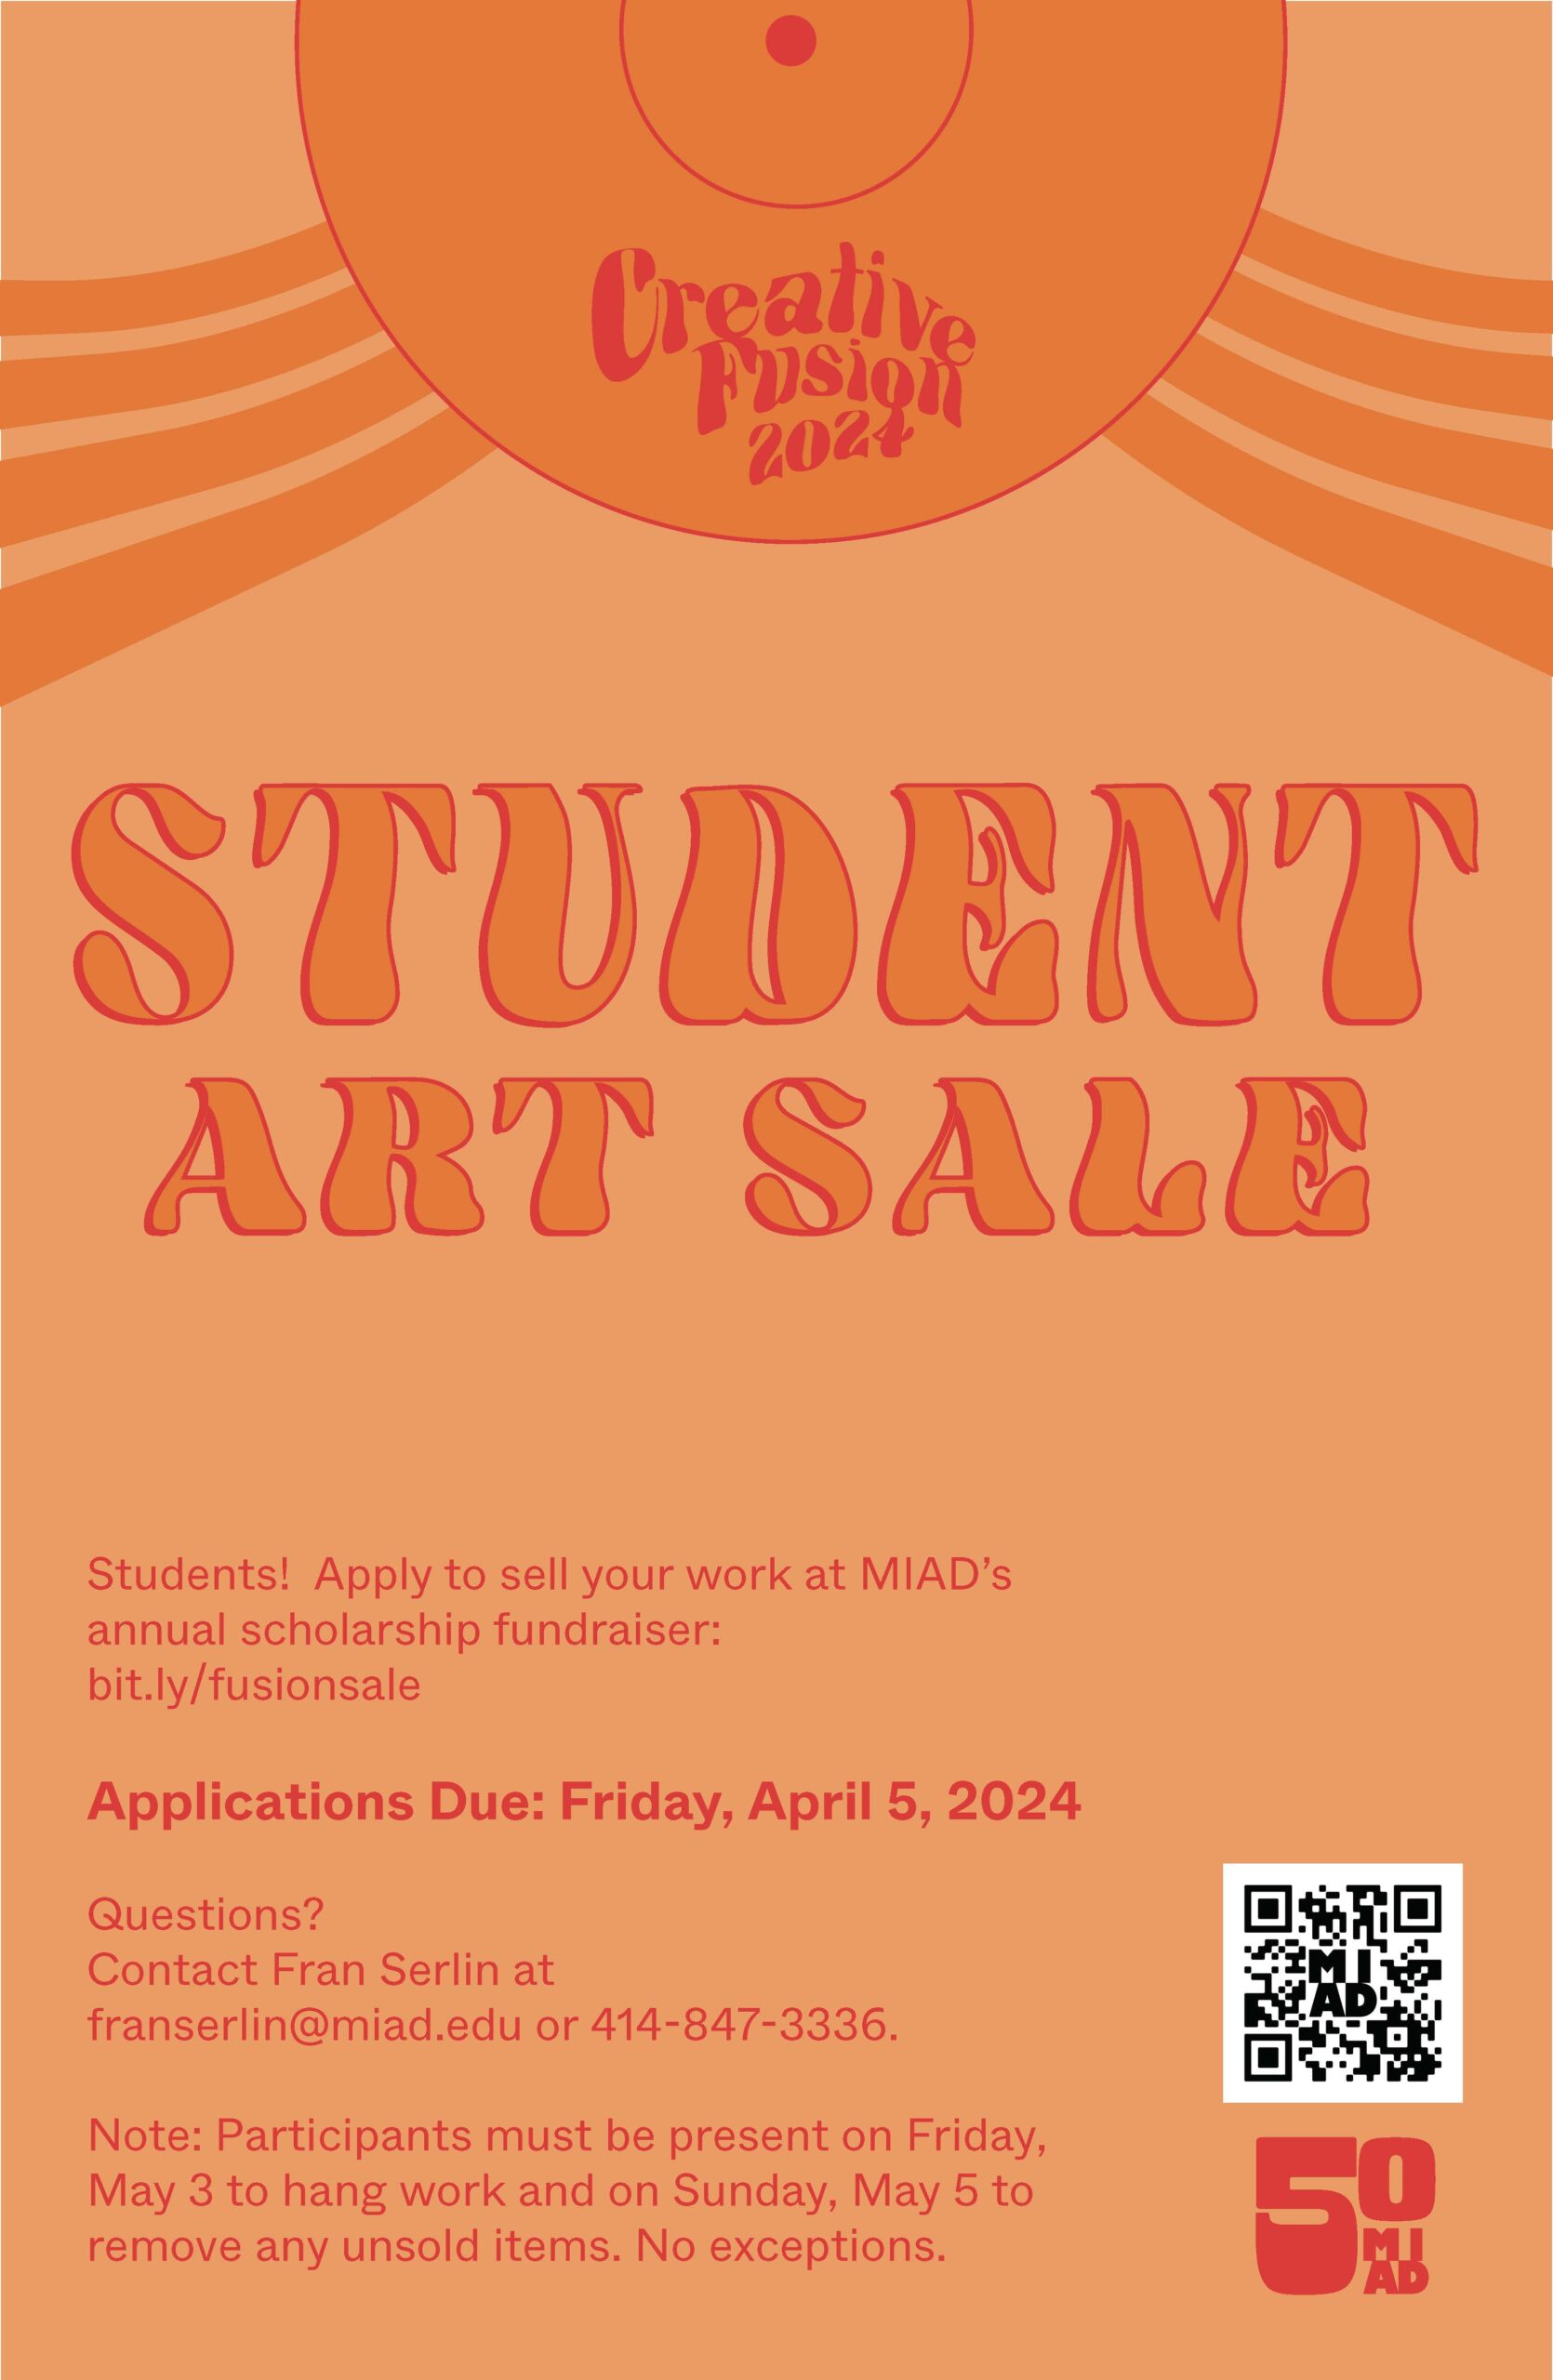 Creative Fusion 2024 – Student Art Sale